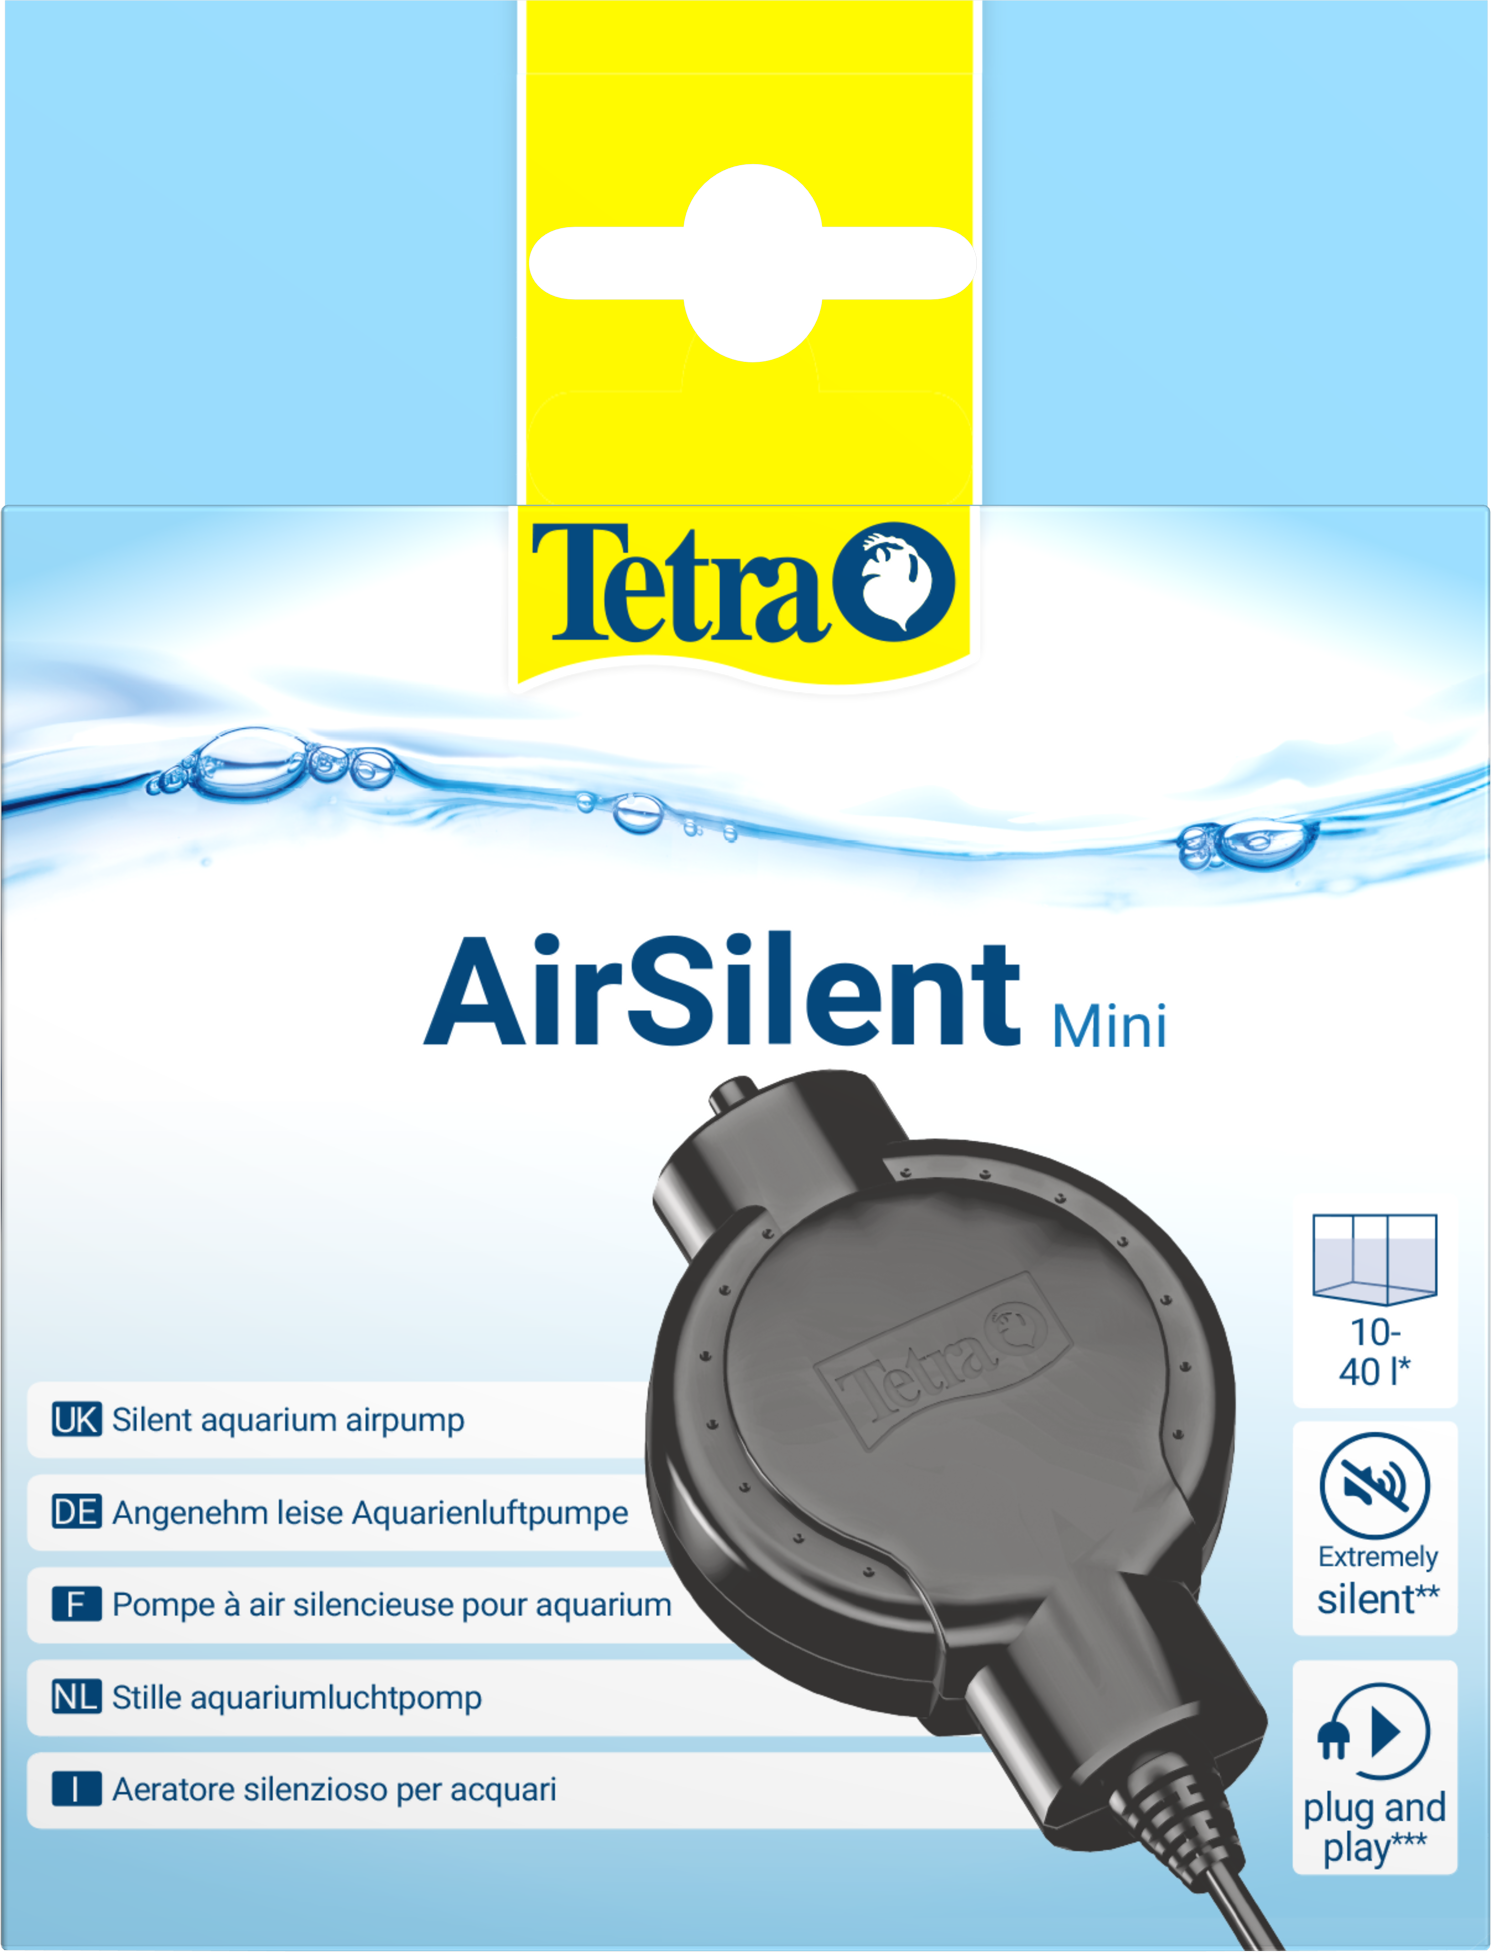 Tetra AirSilent Mini: Tetra